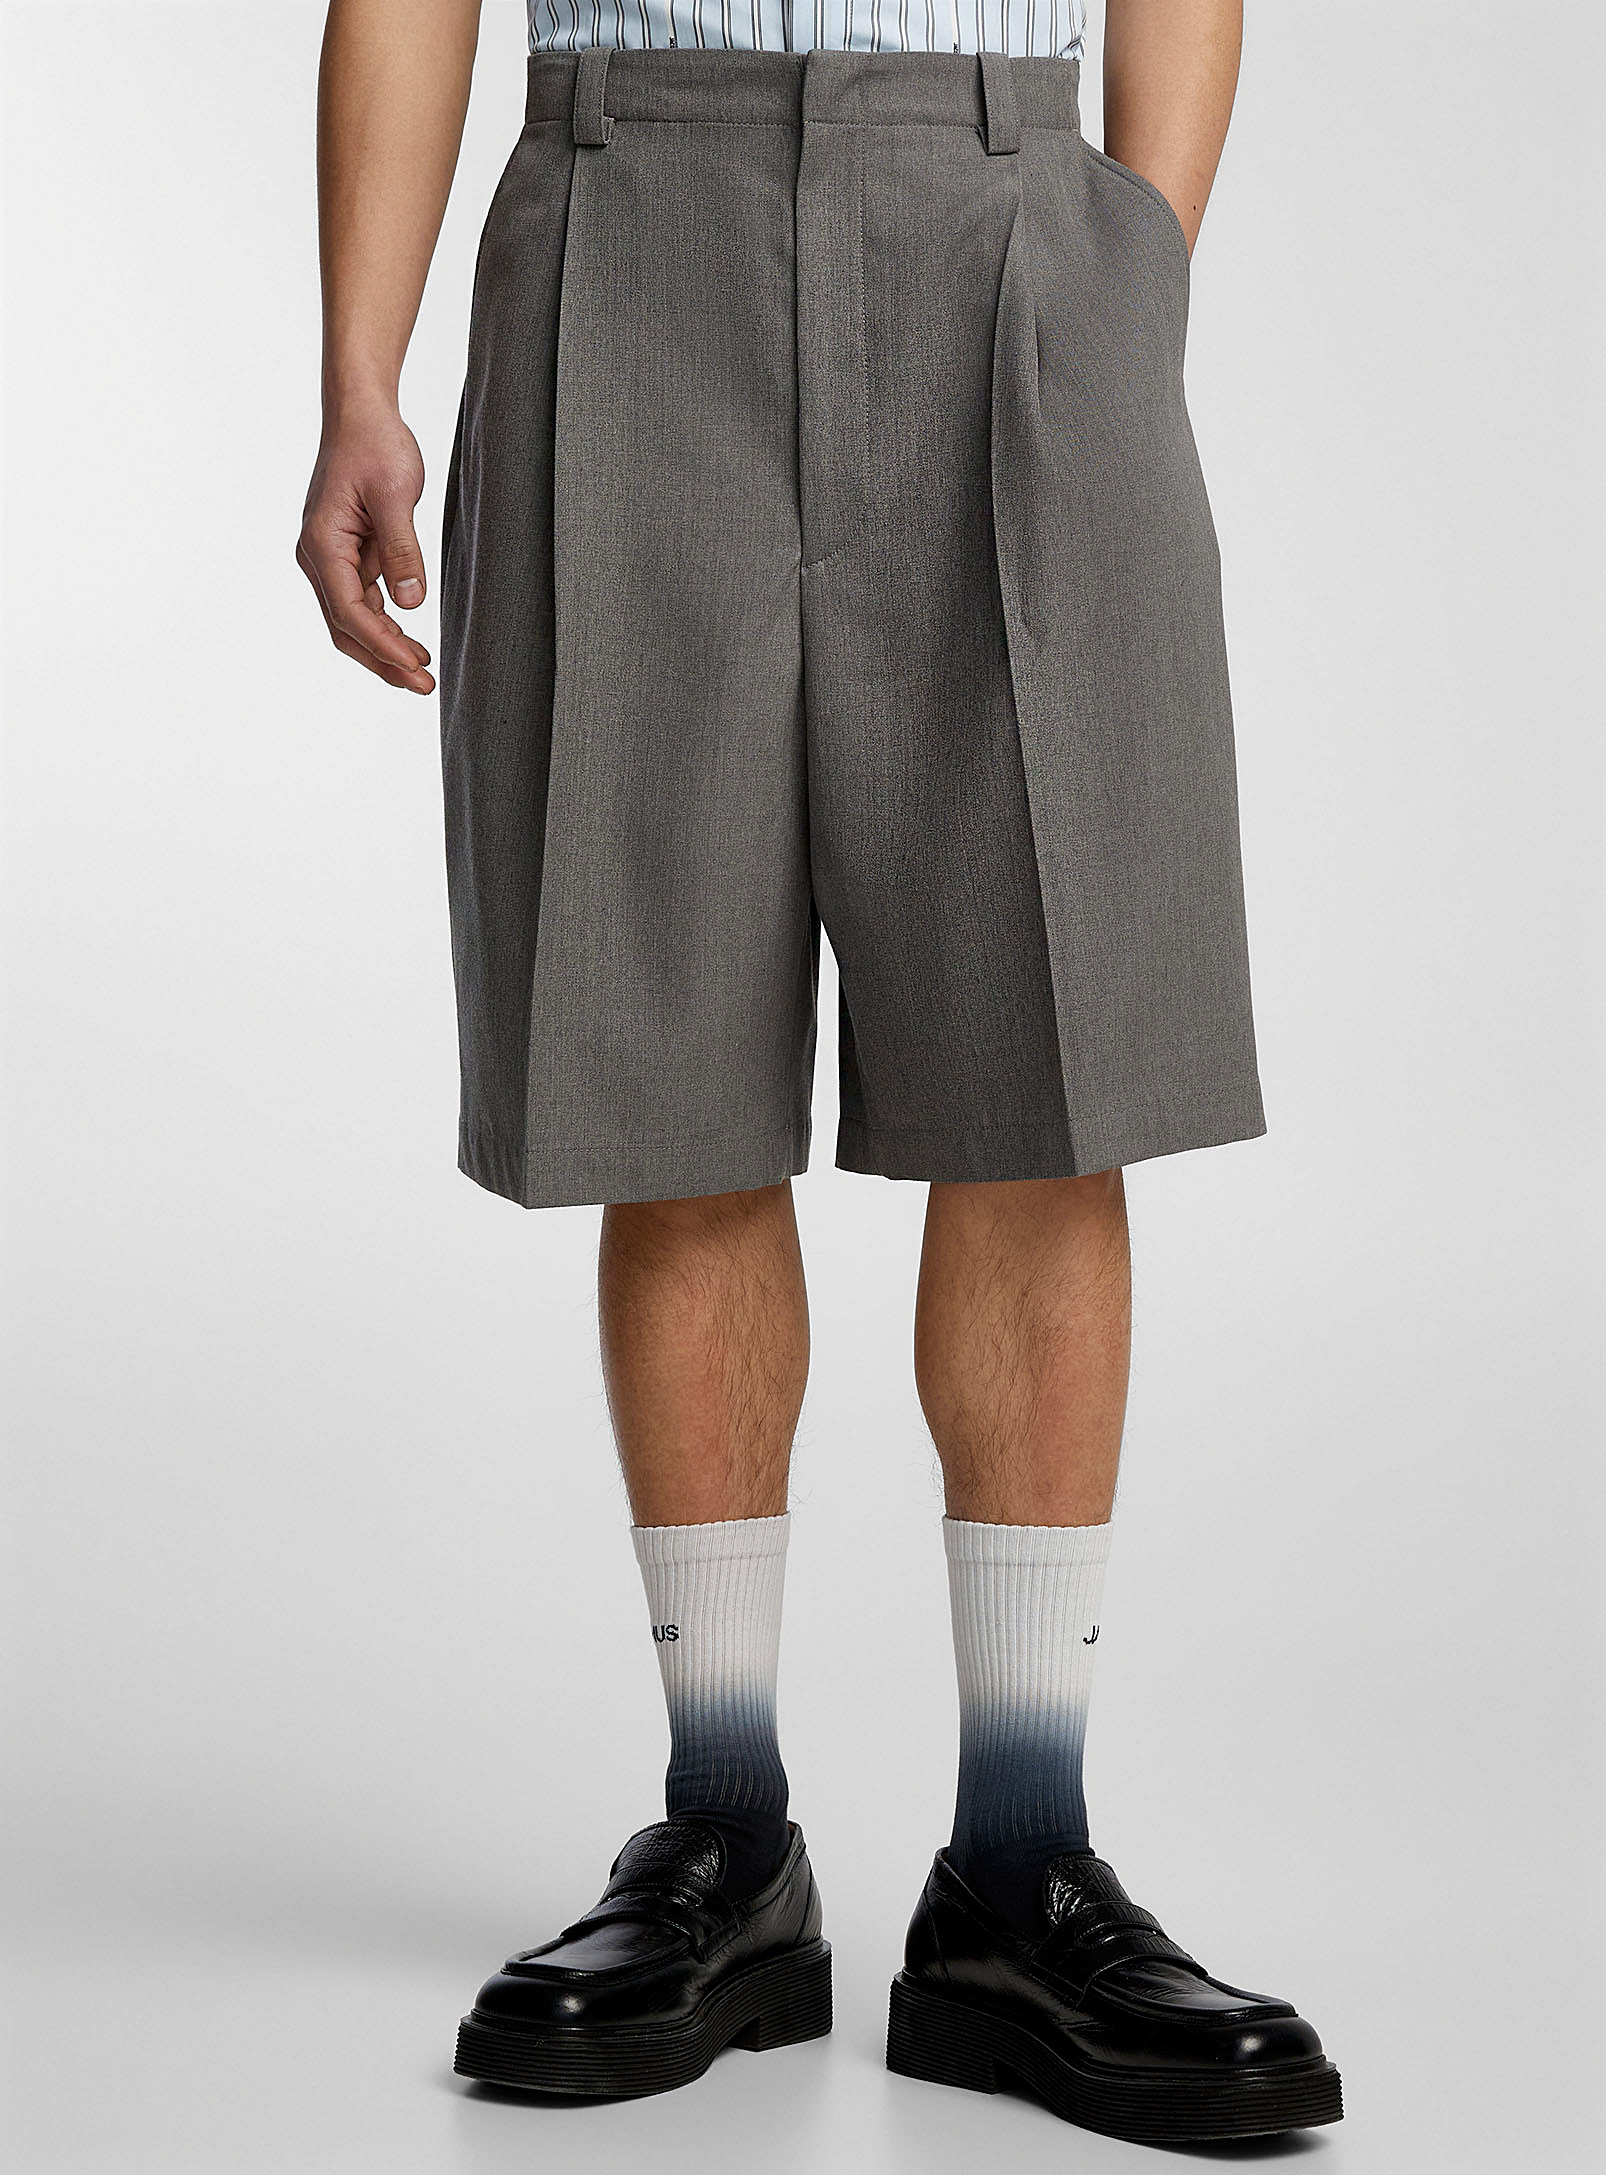 Jacquemus - Men's Salti shorts